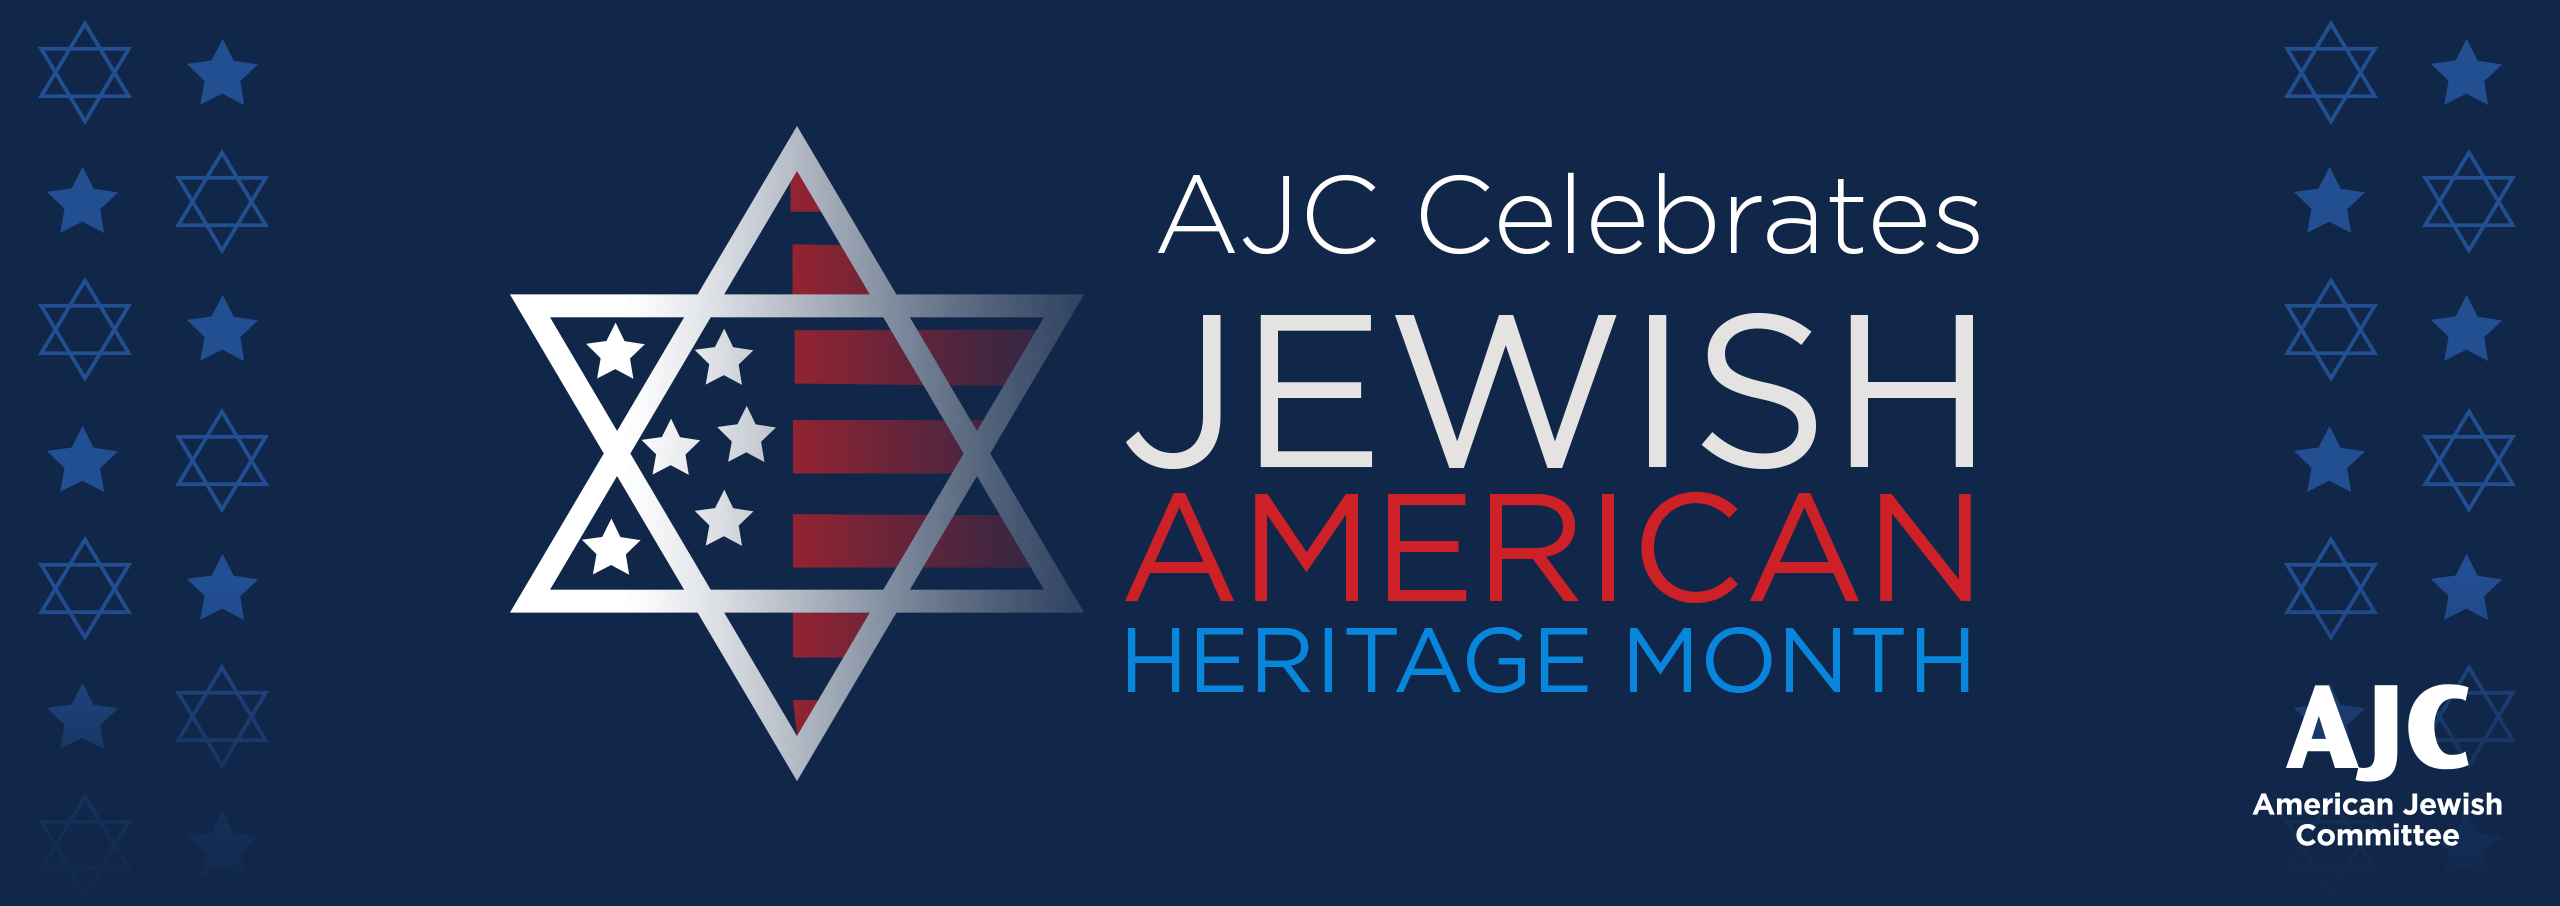 Ways to Celebrate Jewish American Heritage Month AJC